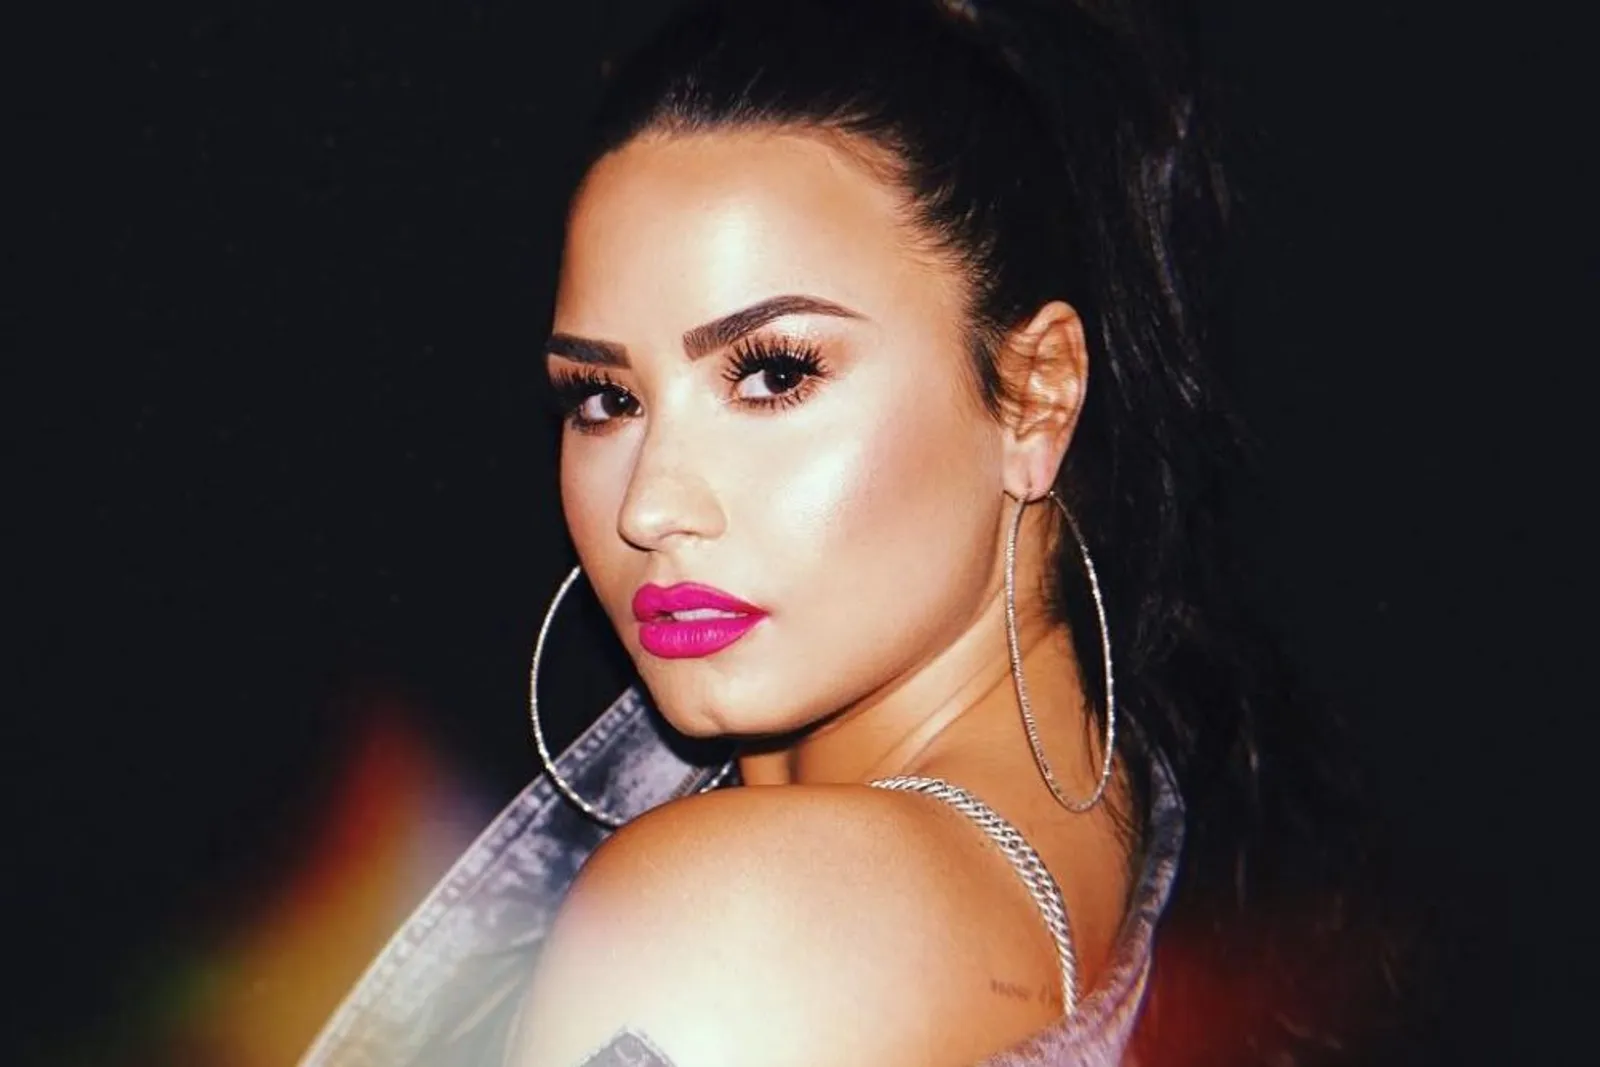 Usai Selamat dari Overdosis, Demi Lovato: “I’m So Blessed”